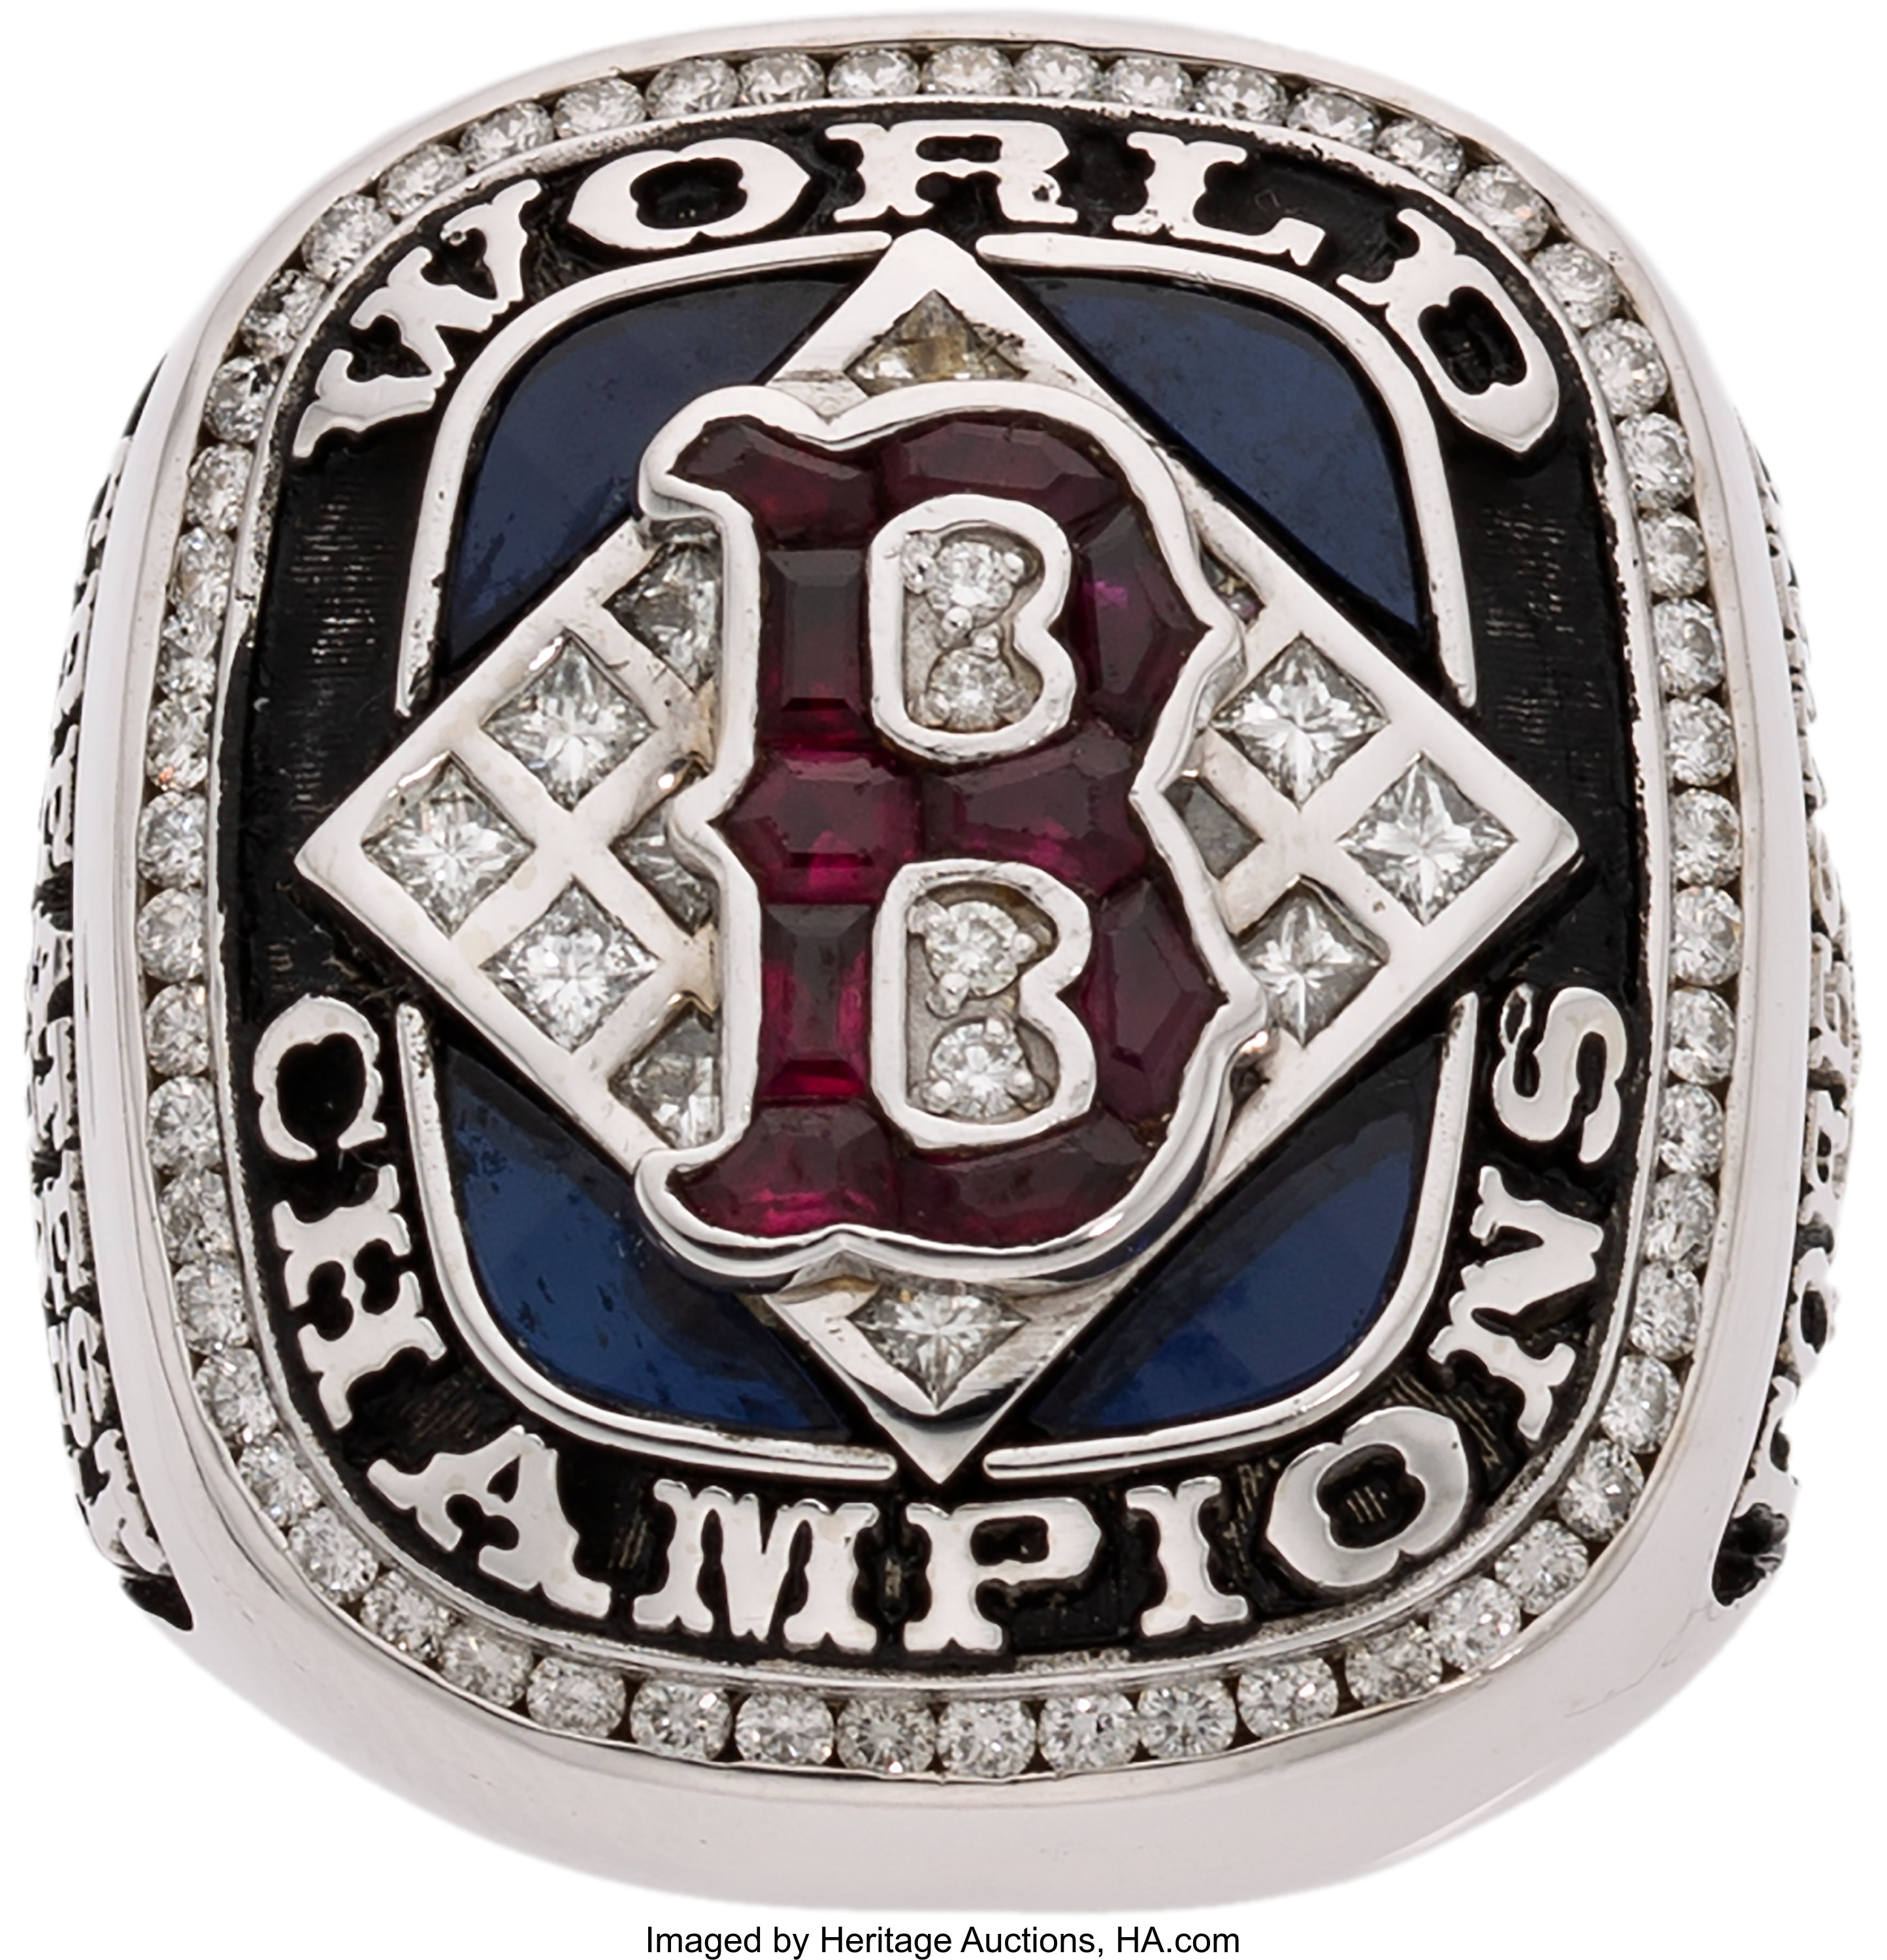 2018 Boston Red Sox World Series Championship Ring -  www.championshipringclub.com